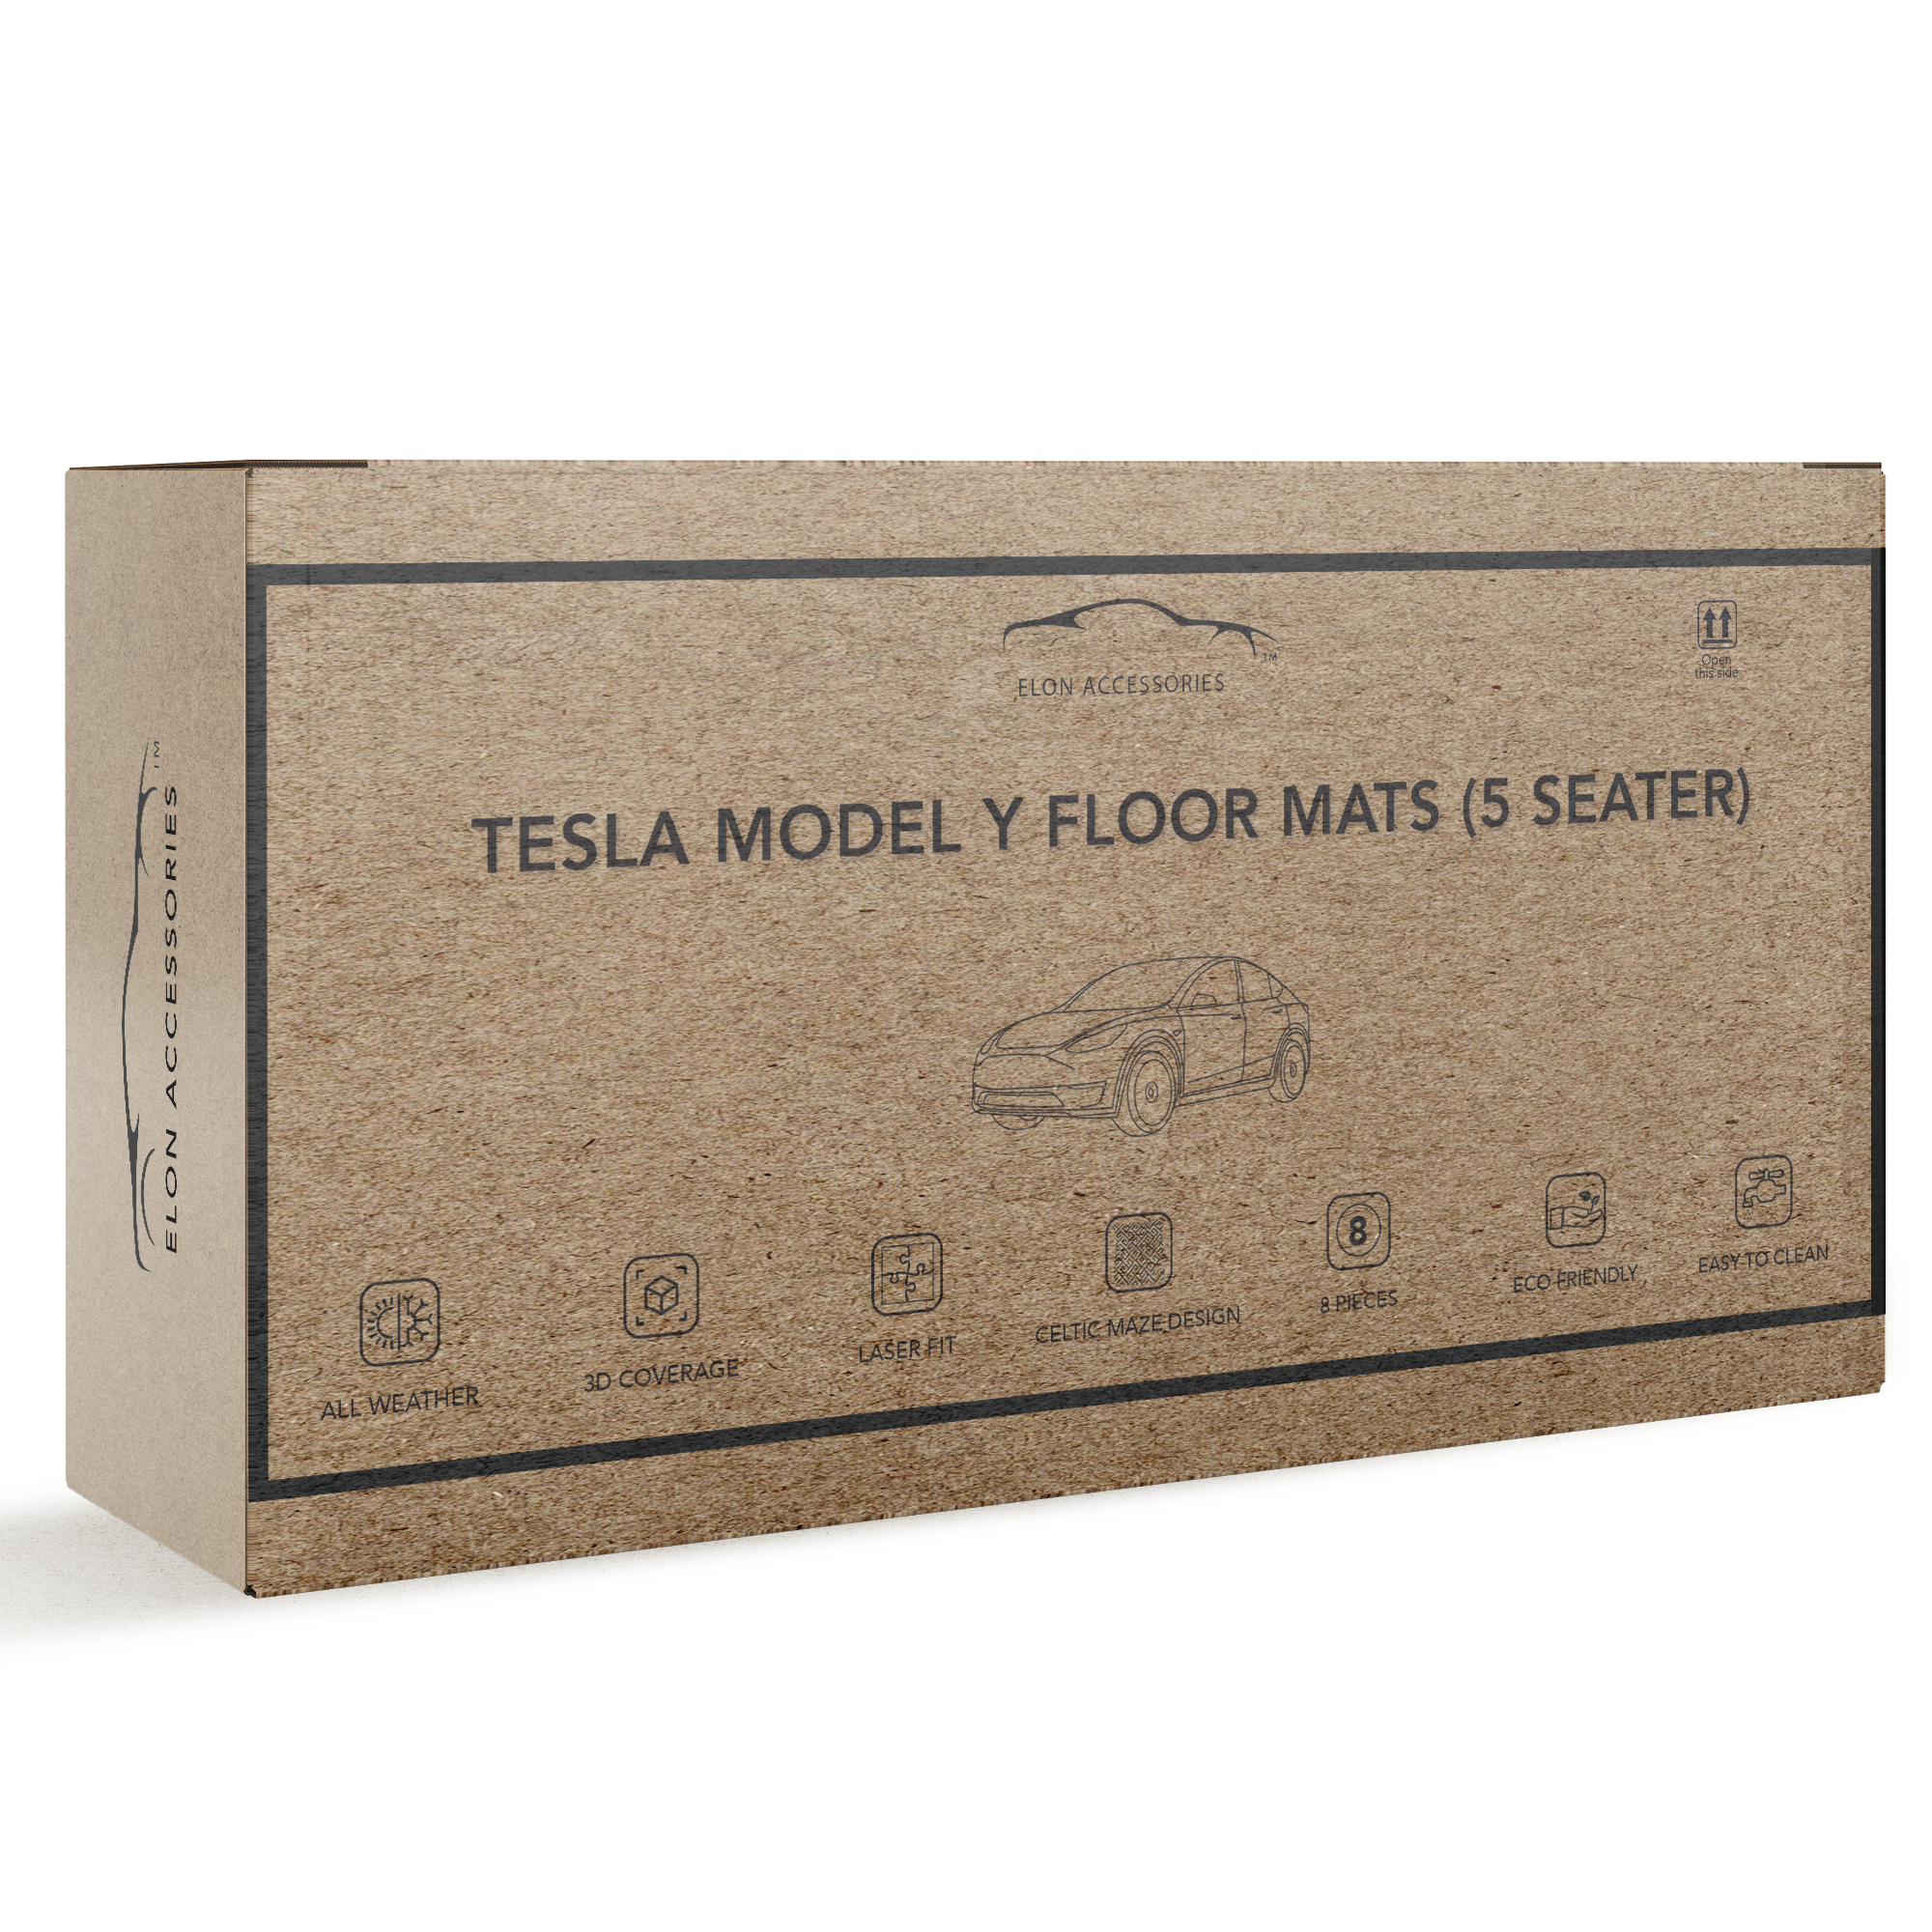 All-Weather, 3D Fit, Tesla Model Y Floor Mats (5-Seater): Complete 11 –  Giga Accessories